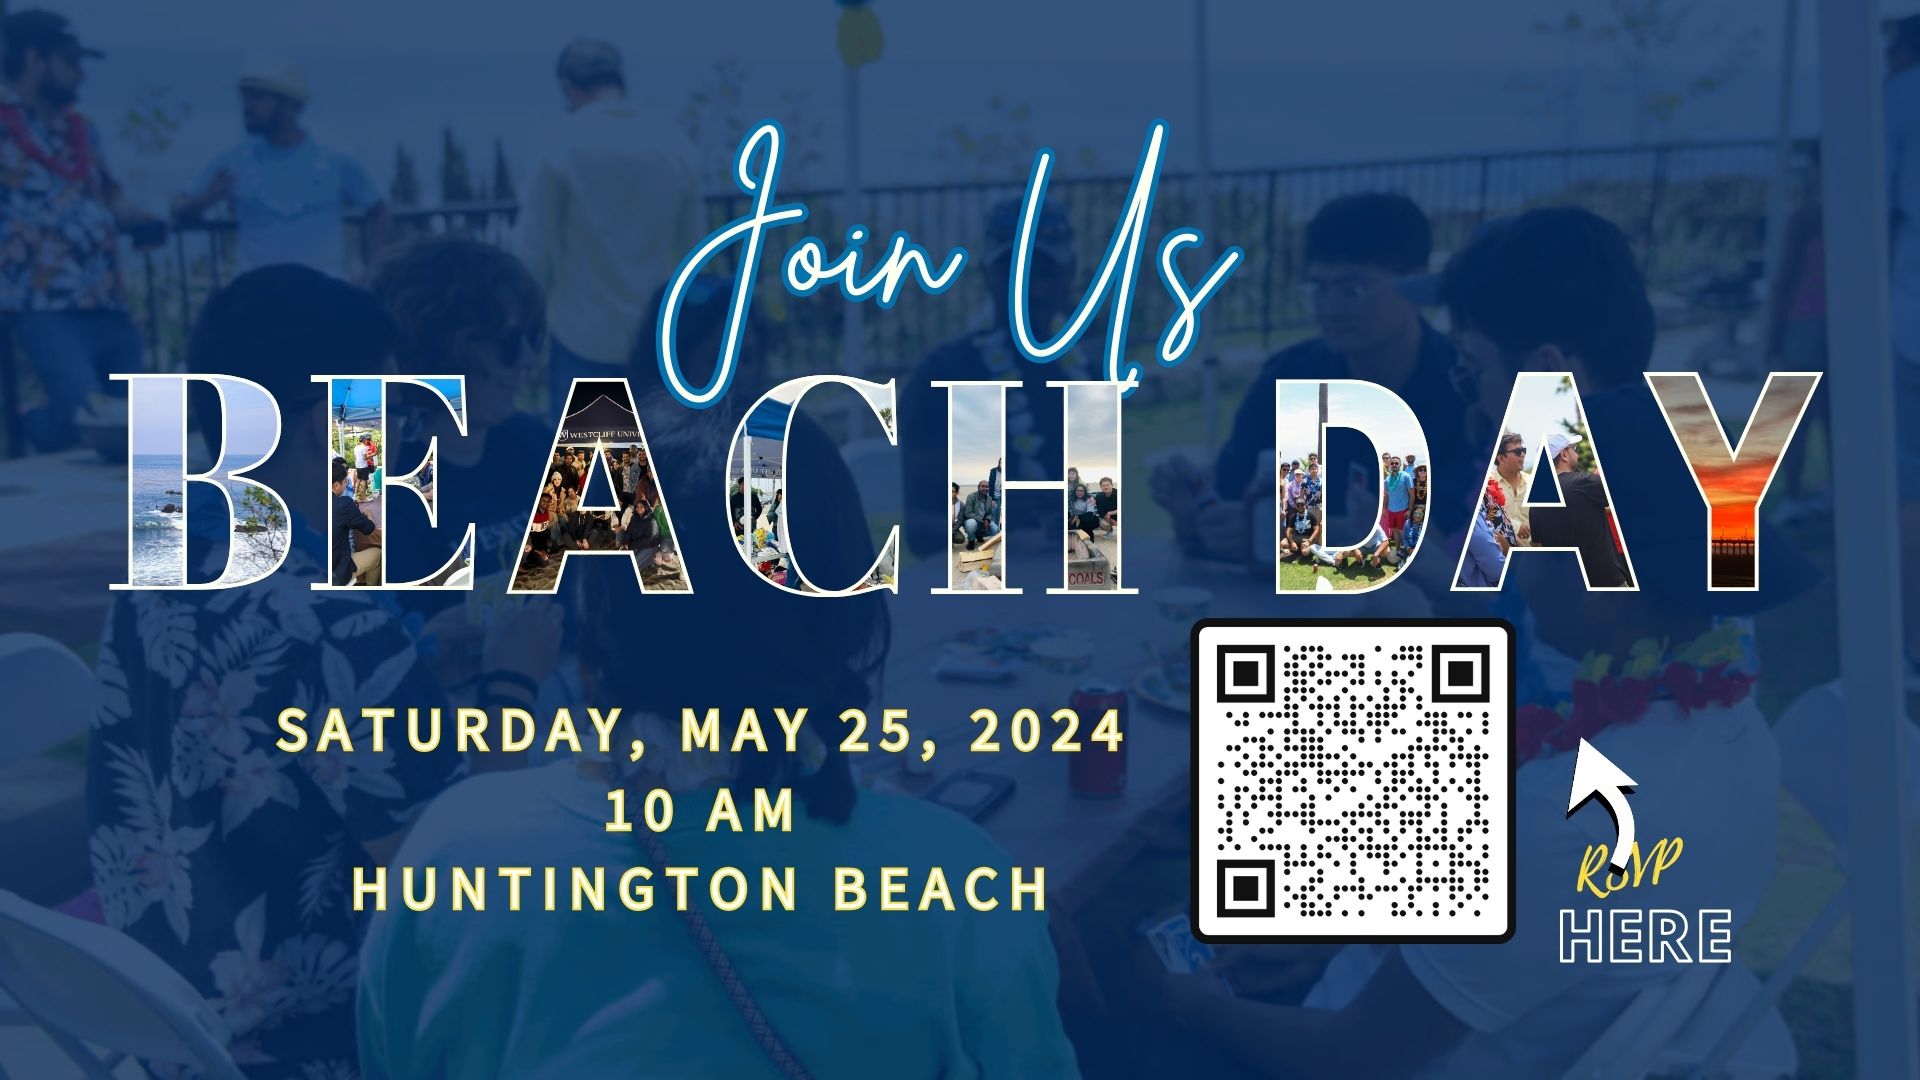 Westcliff University Student Life Beach Day, May 25, 2024